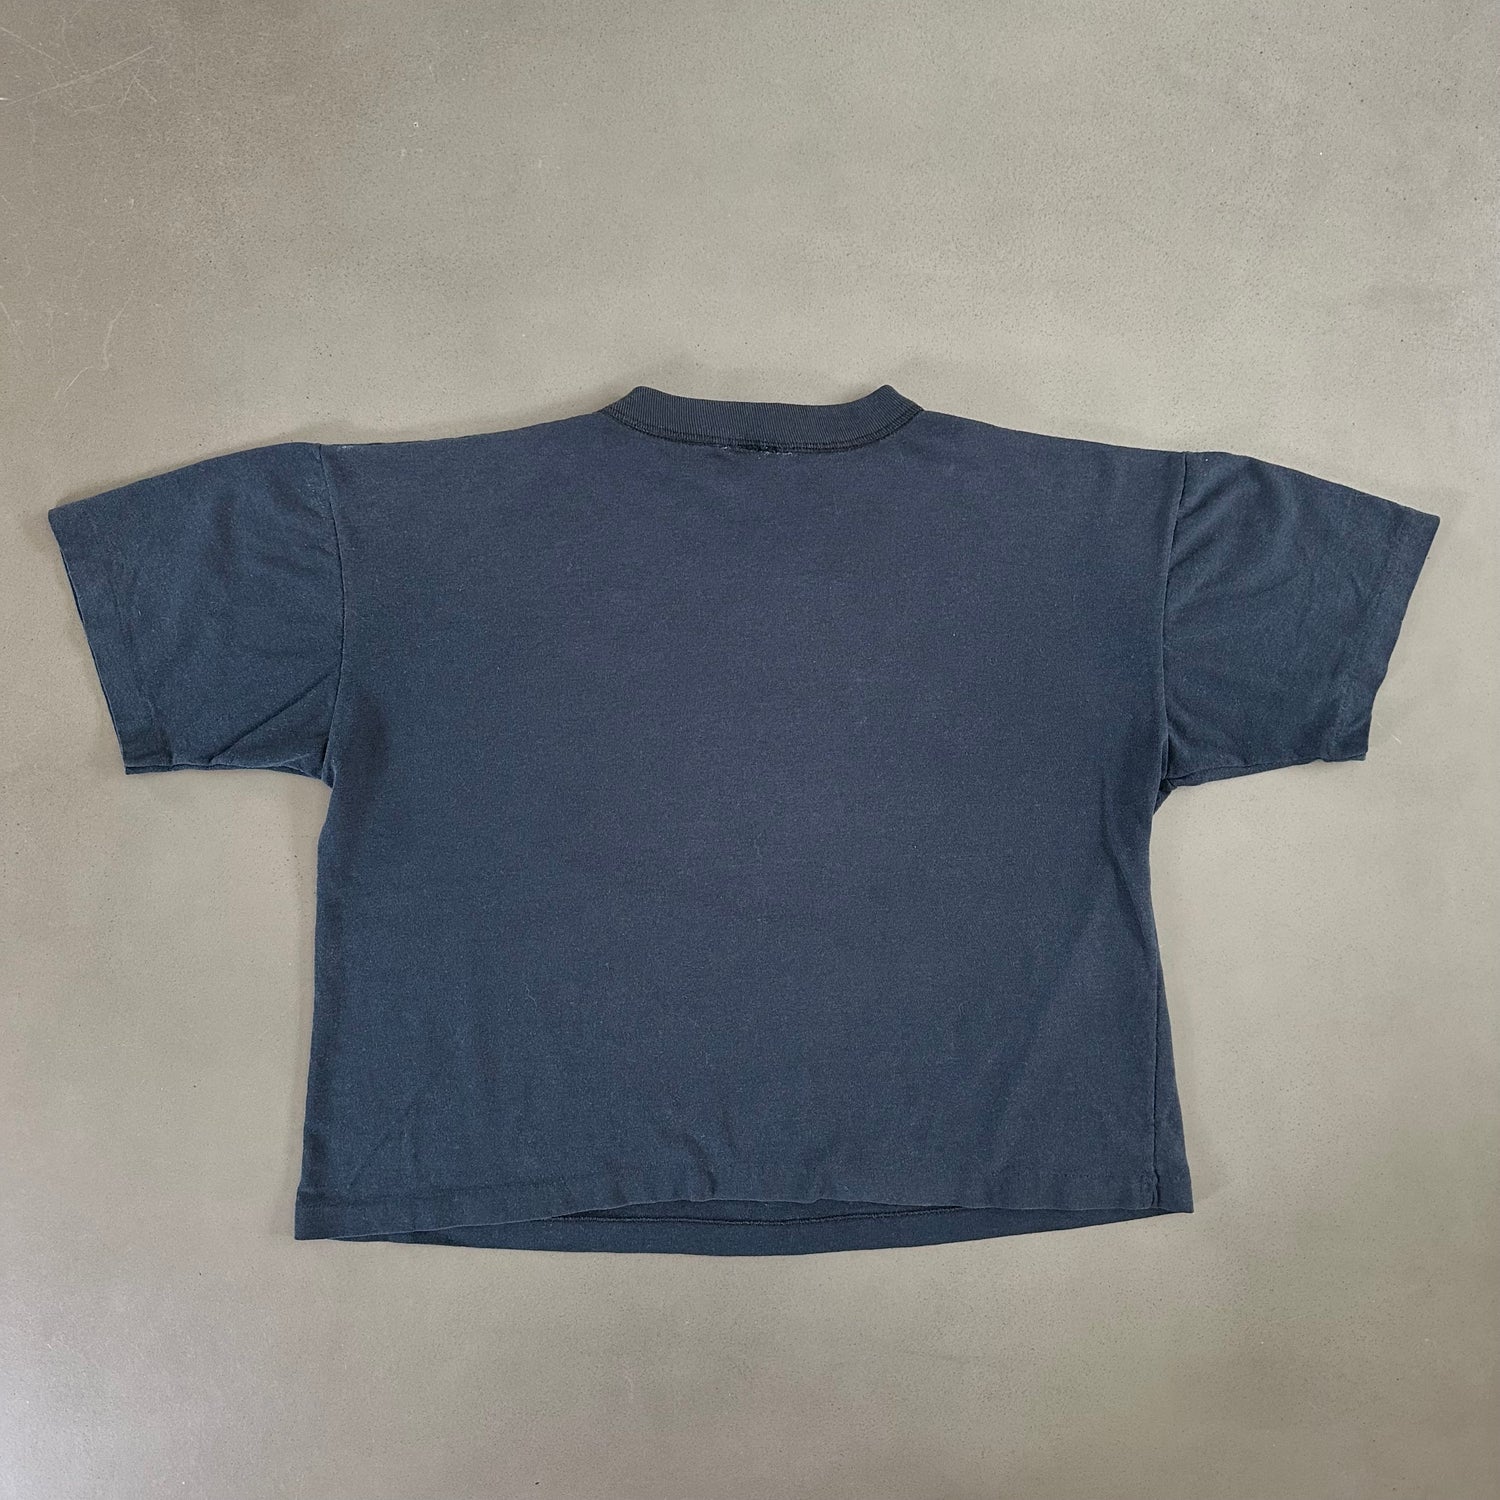 Vintage 1990s Bird T-shirt size Medium